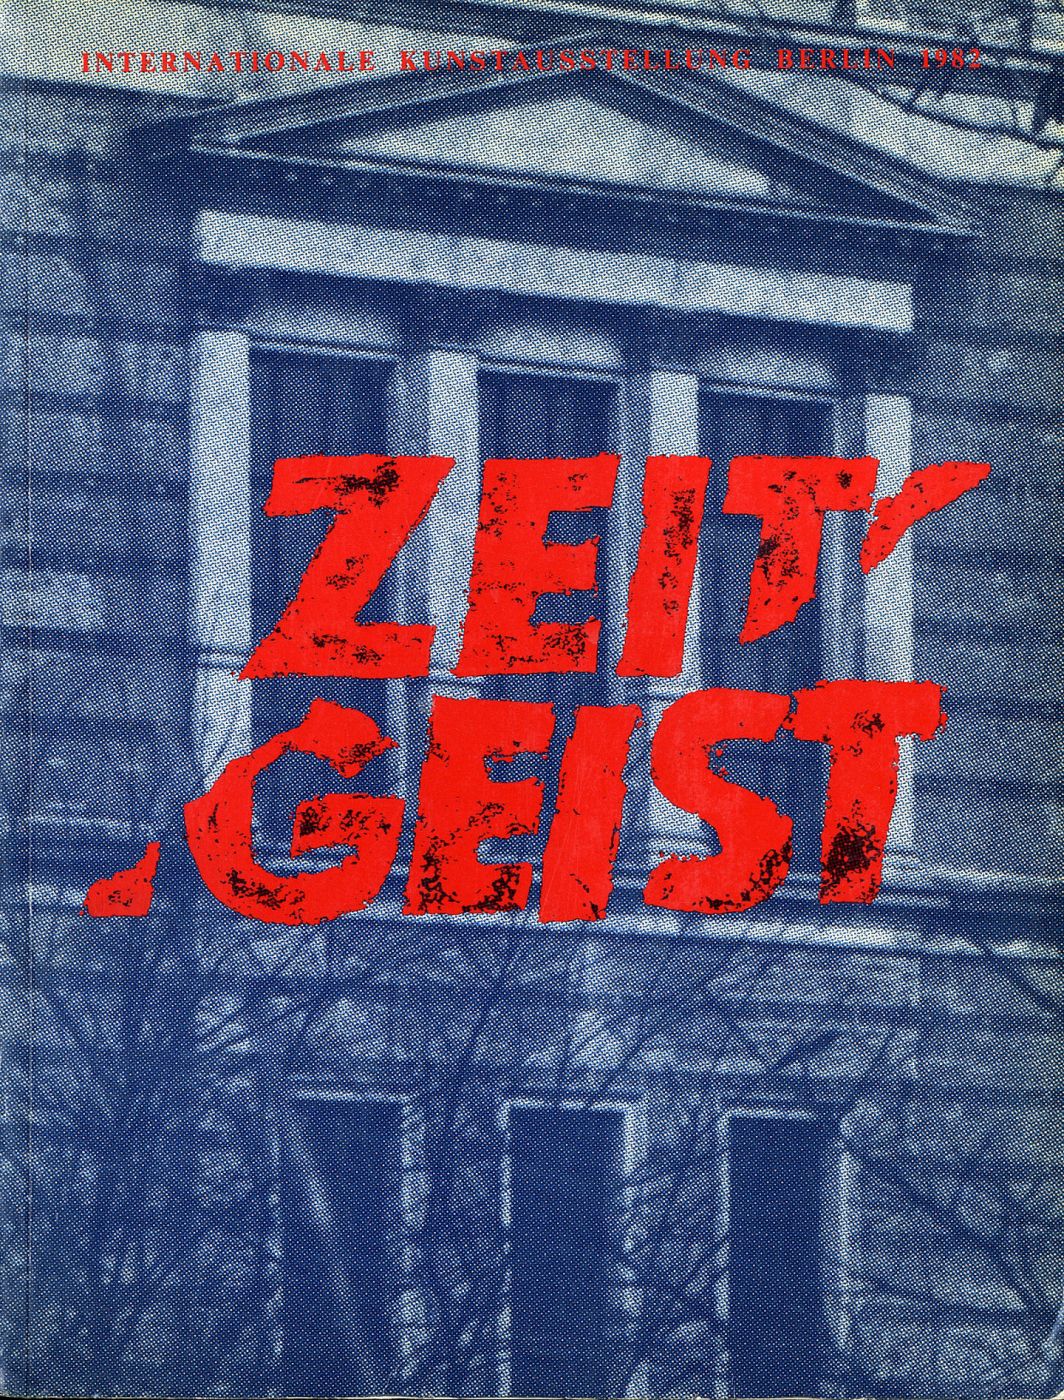 Zeitgeist: Internationale Kunstaustellung Berlin [SIGNED ASSOCIATION COPY]